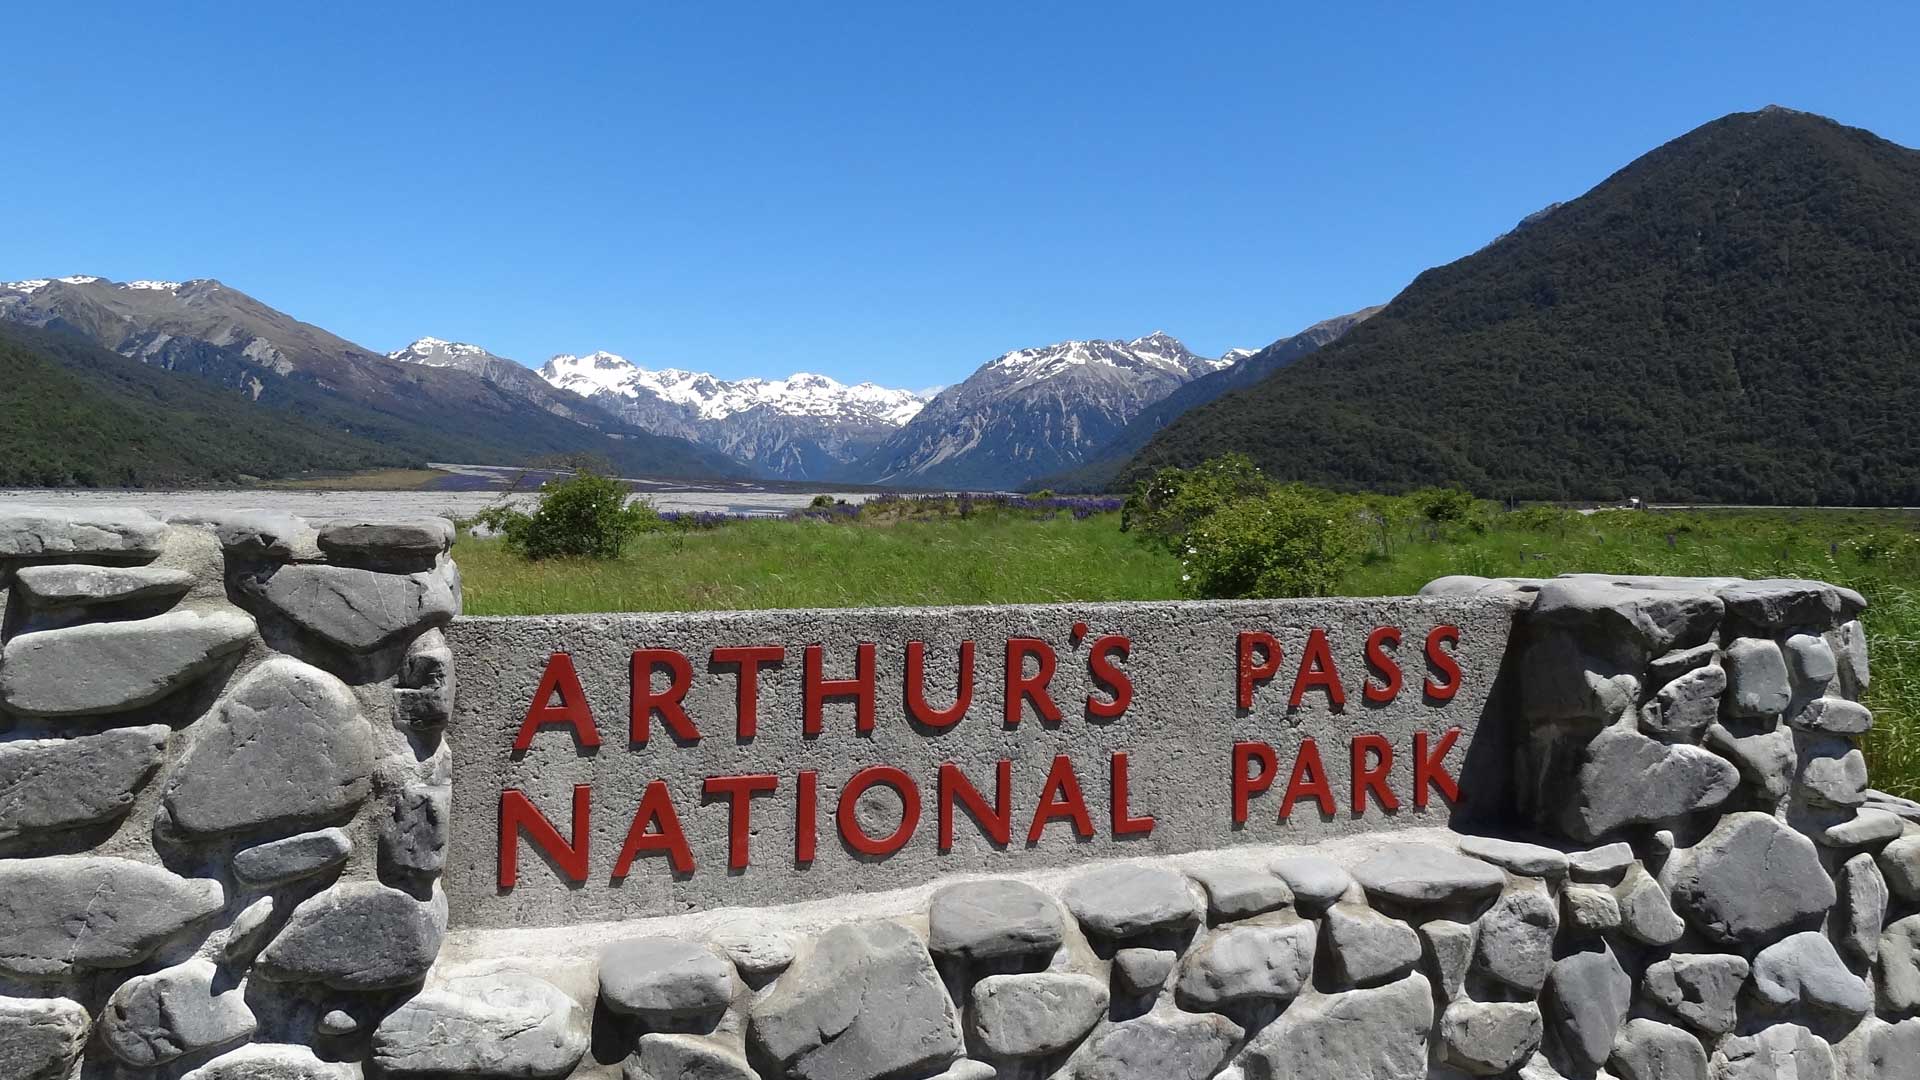 As the sign says... 'Arthur's Pass National Park'